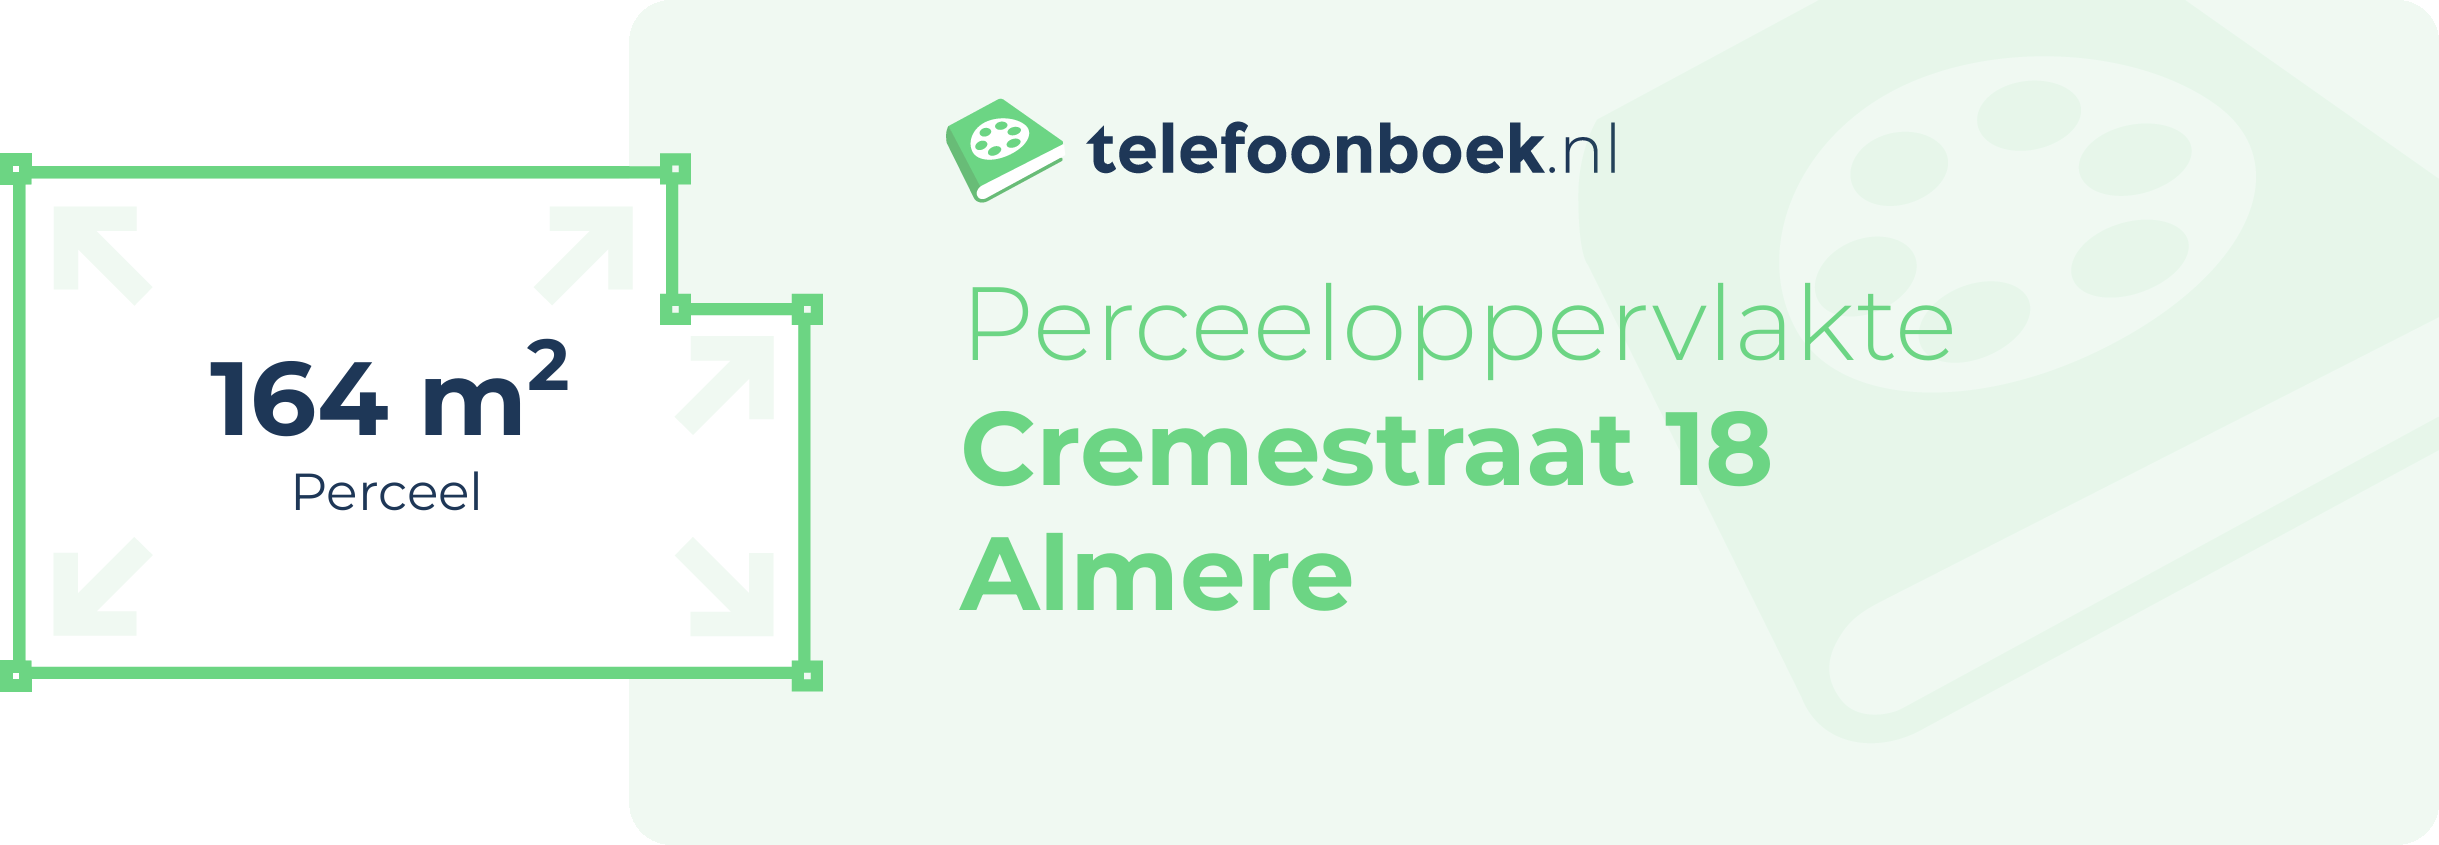 Perceeloppervlakte Cremestraat 18 Almere